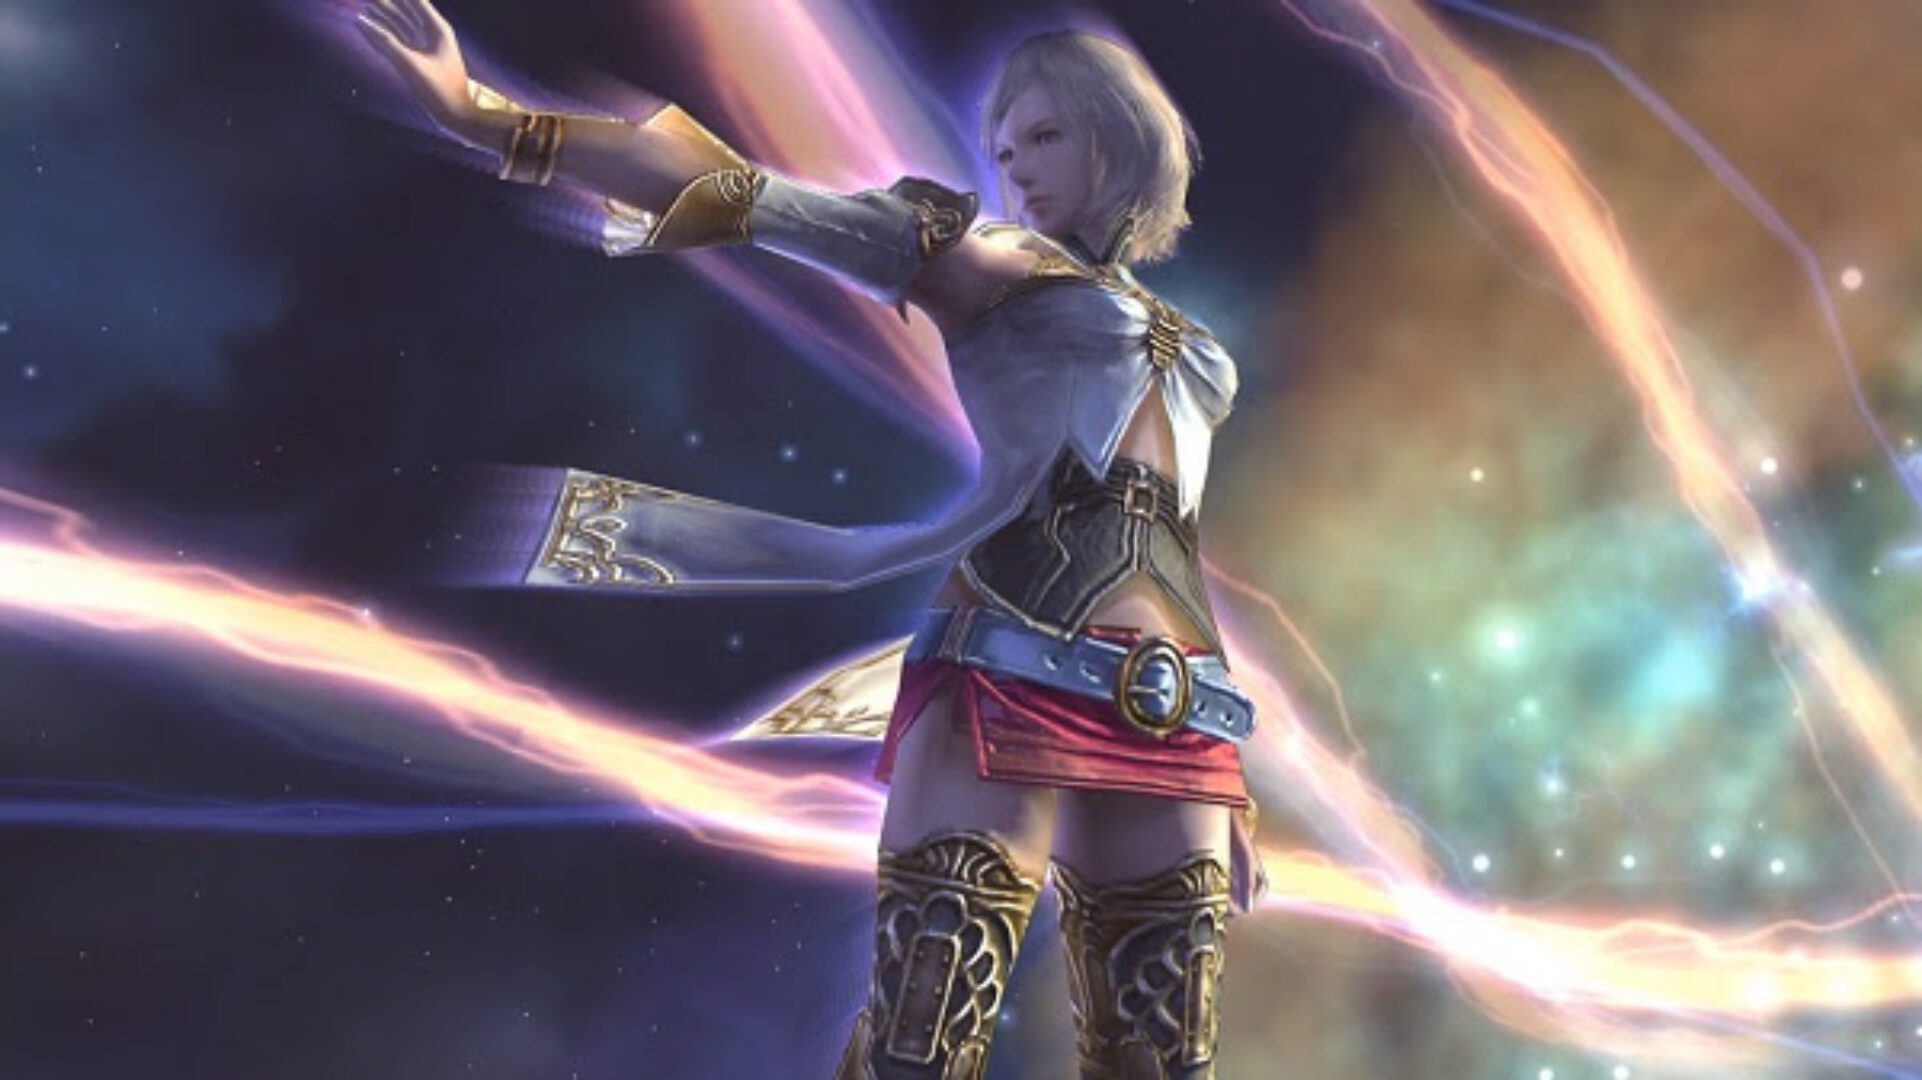 Final Fantasy XII HD Remake Confirmed